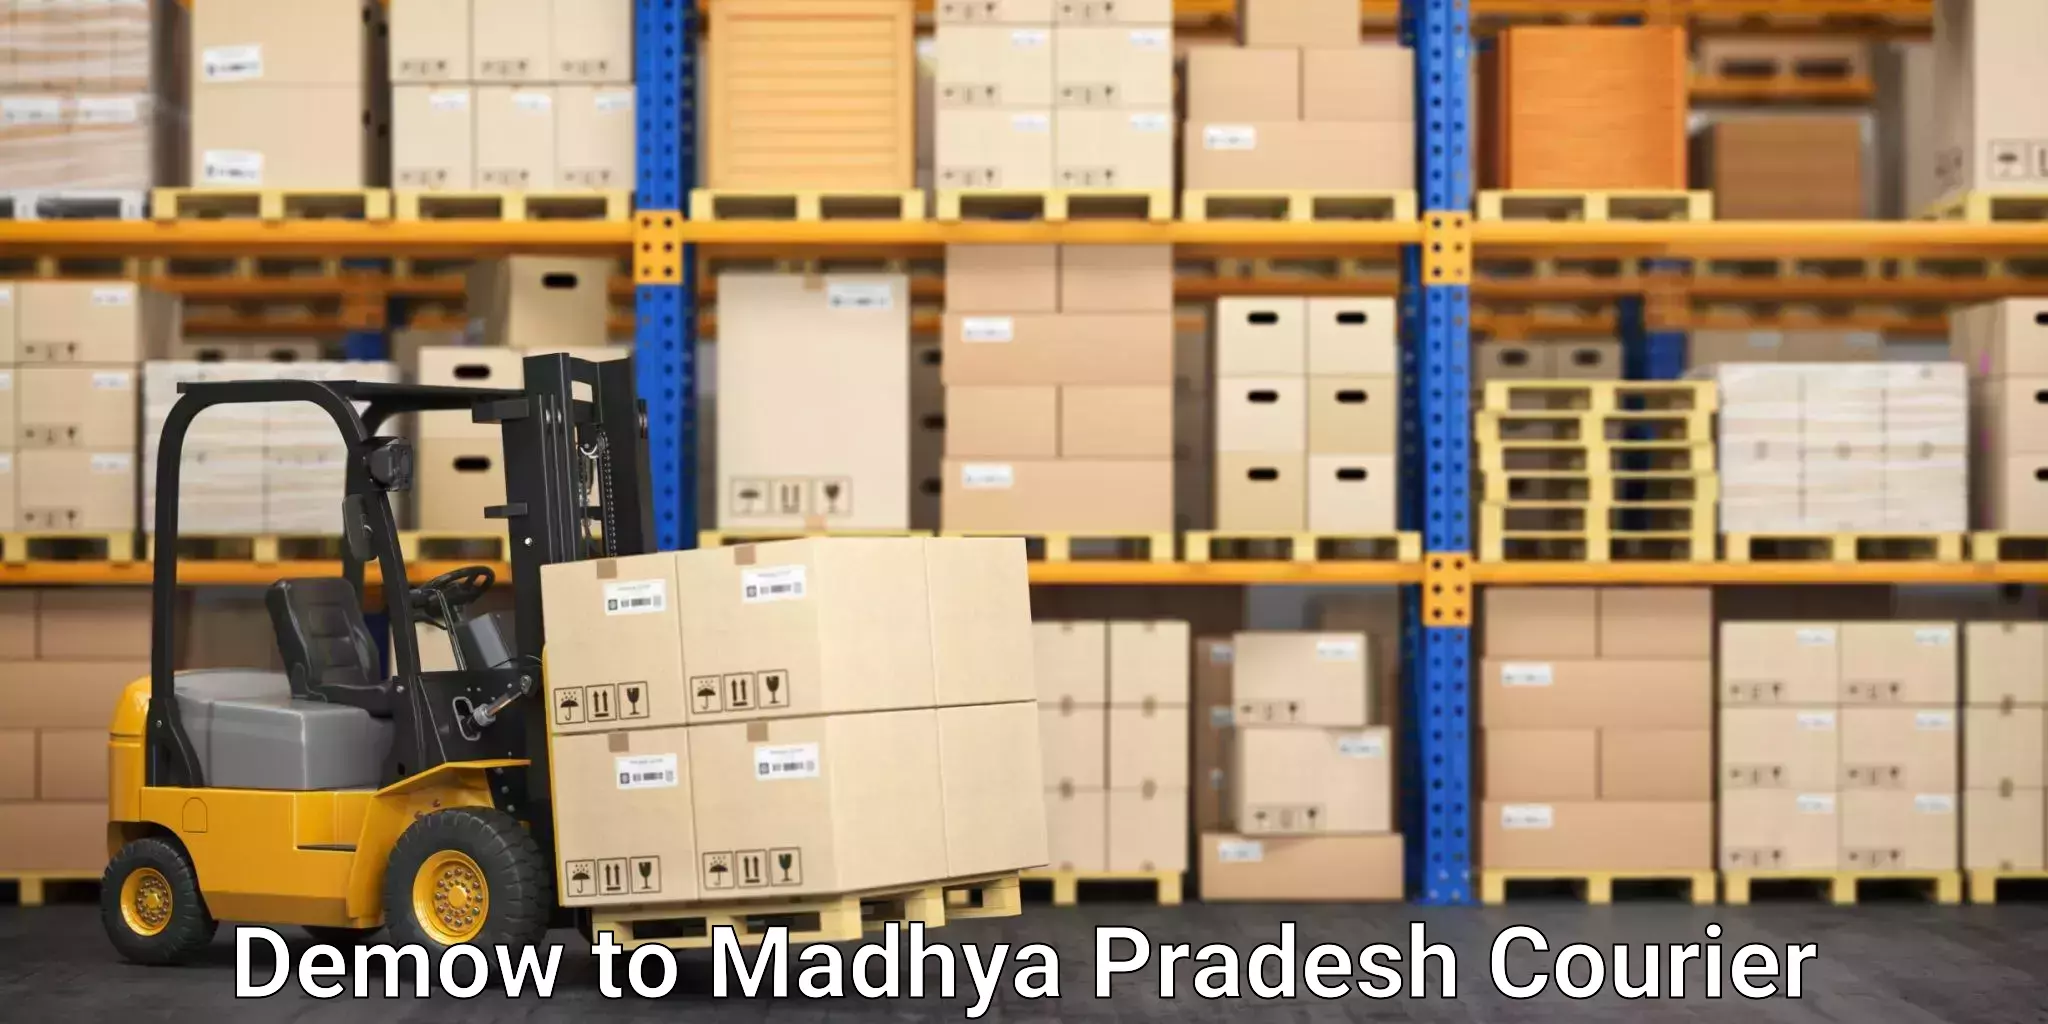 High-priority parcel service Demow to Madhya Pradesh